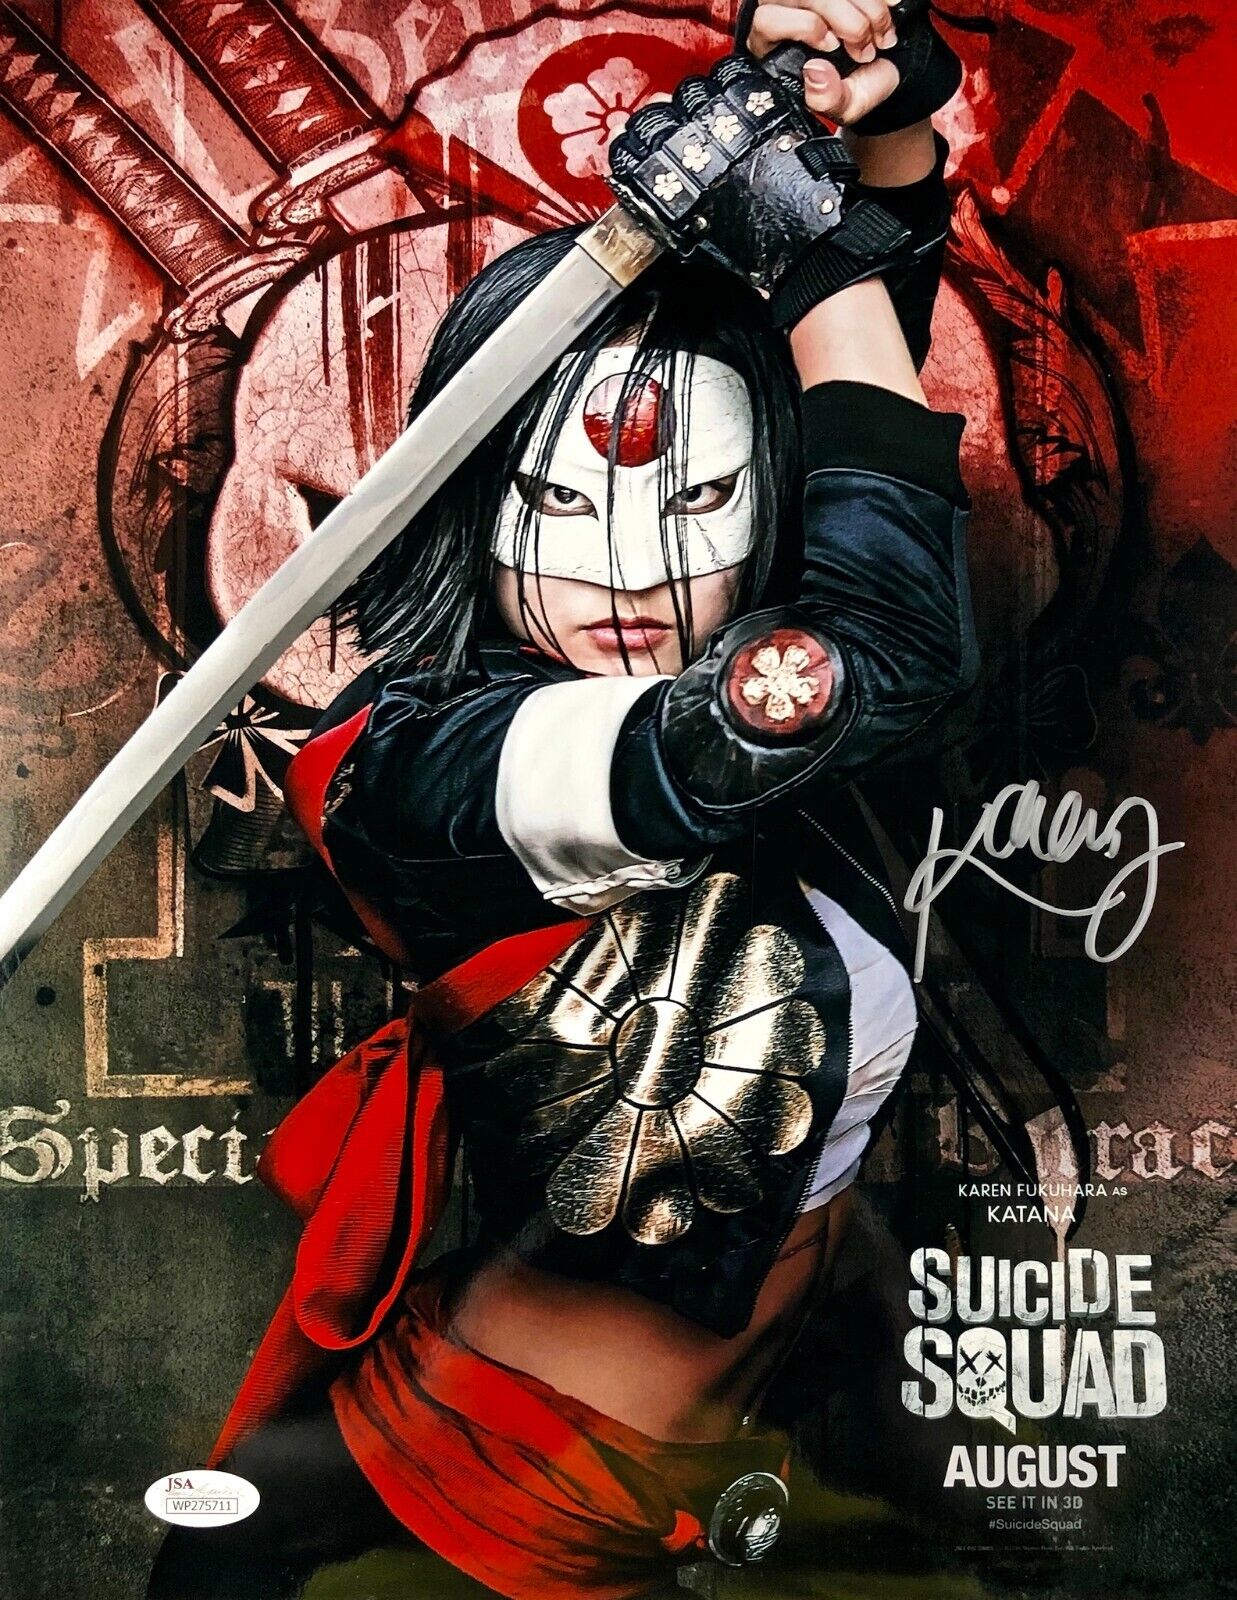 KAREN FUKUHARA Autographed SIGNED 11x14 Metallic SUICIDE SQUAD Photo Poster painting Katana JSA